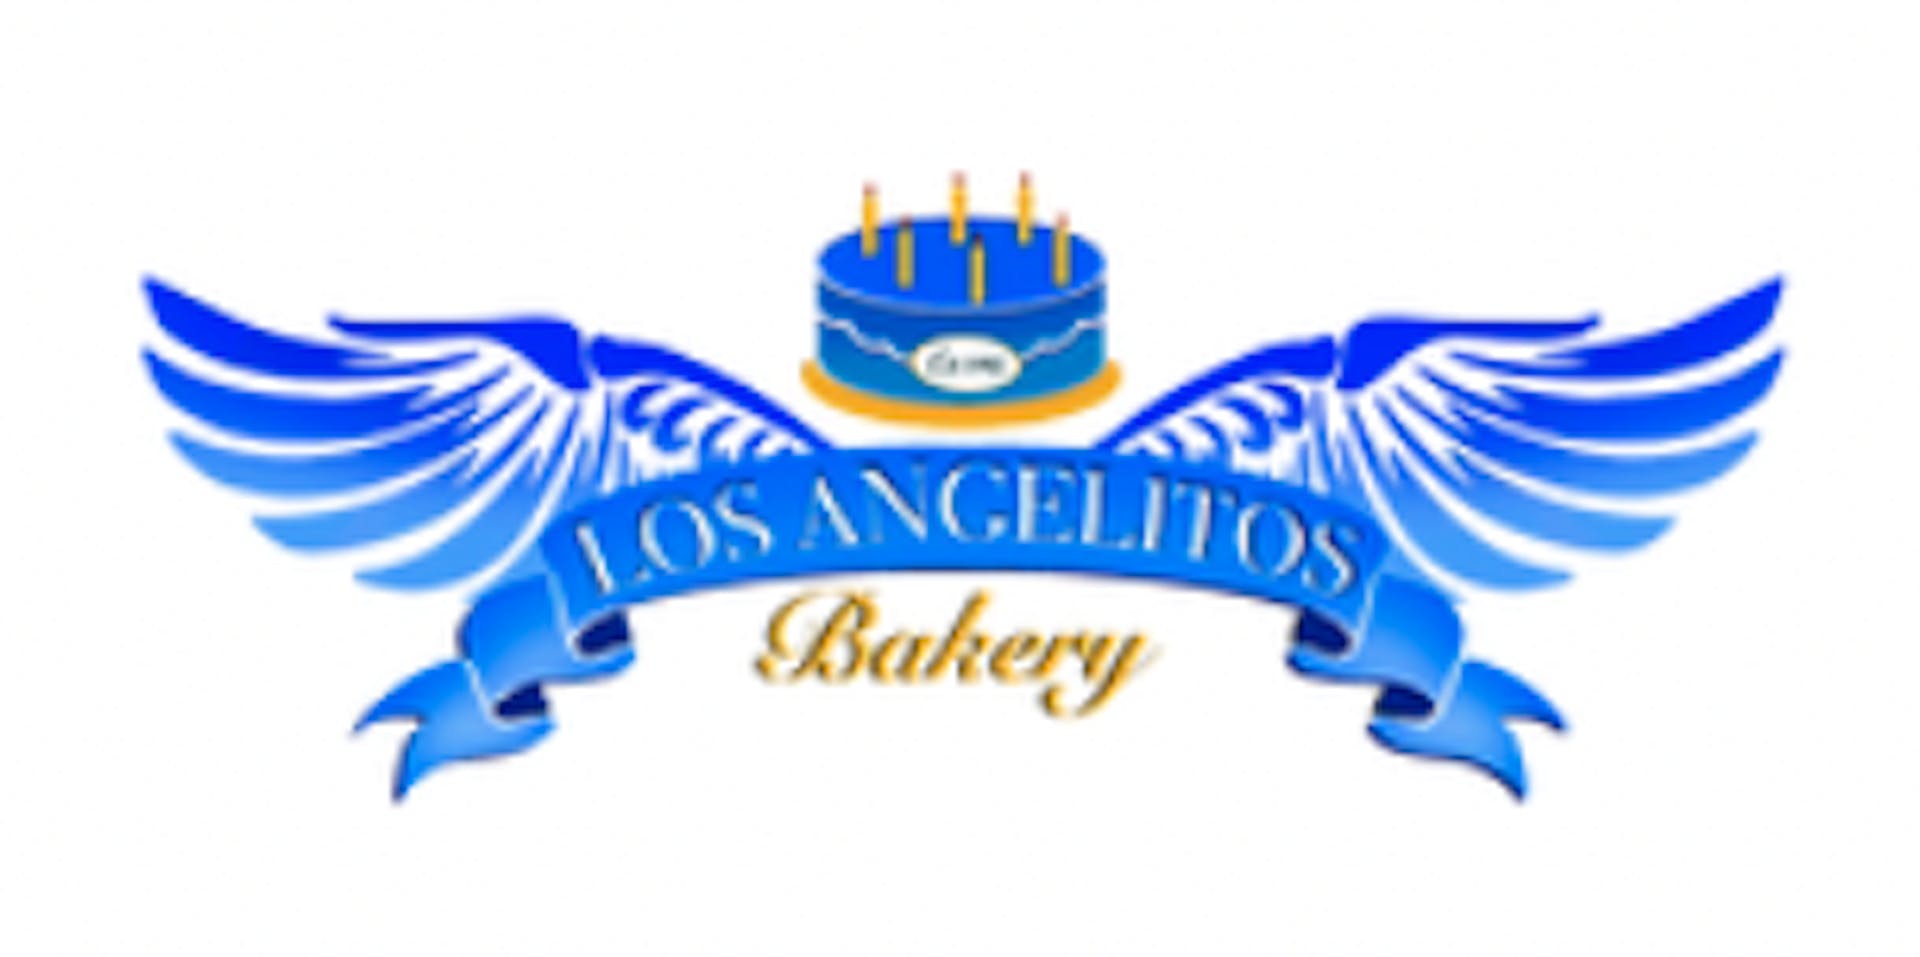 Los Angelito's Bakery